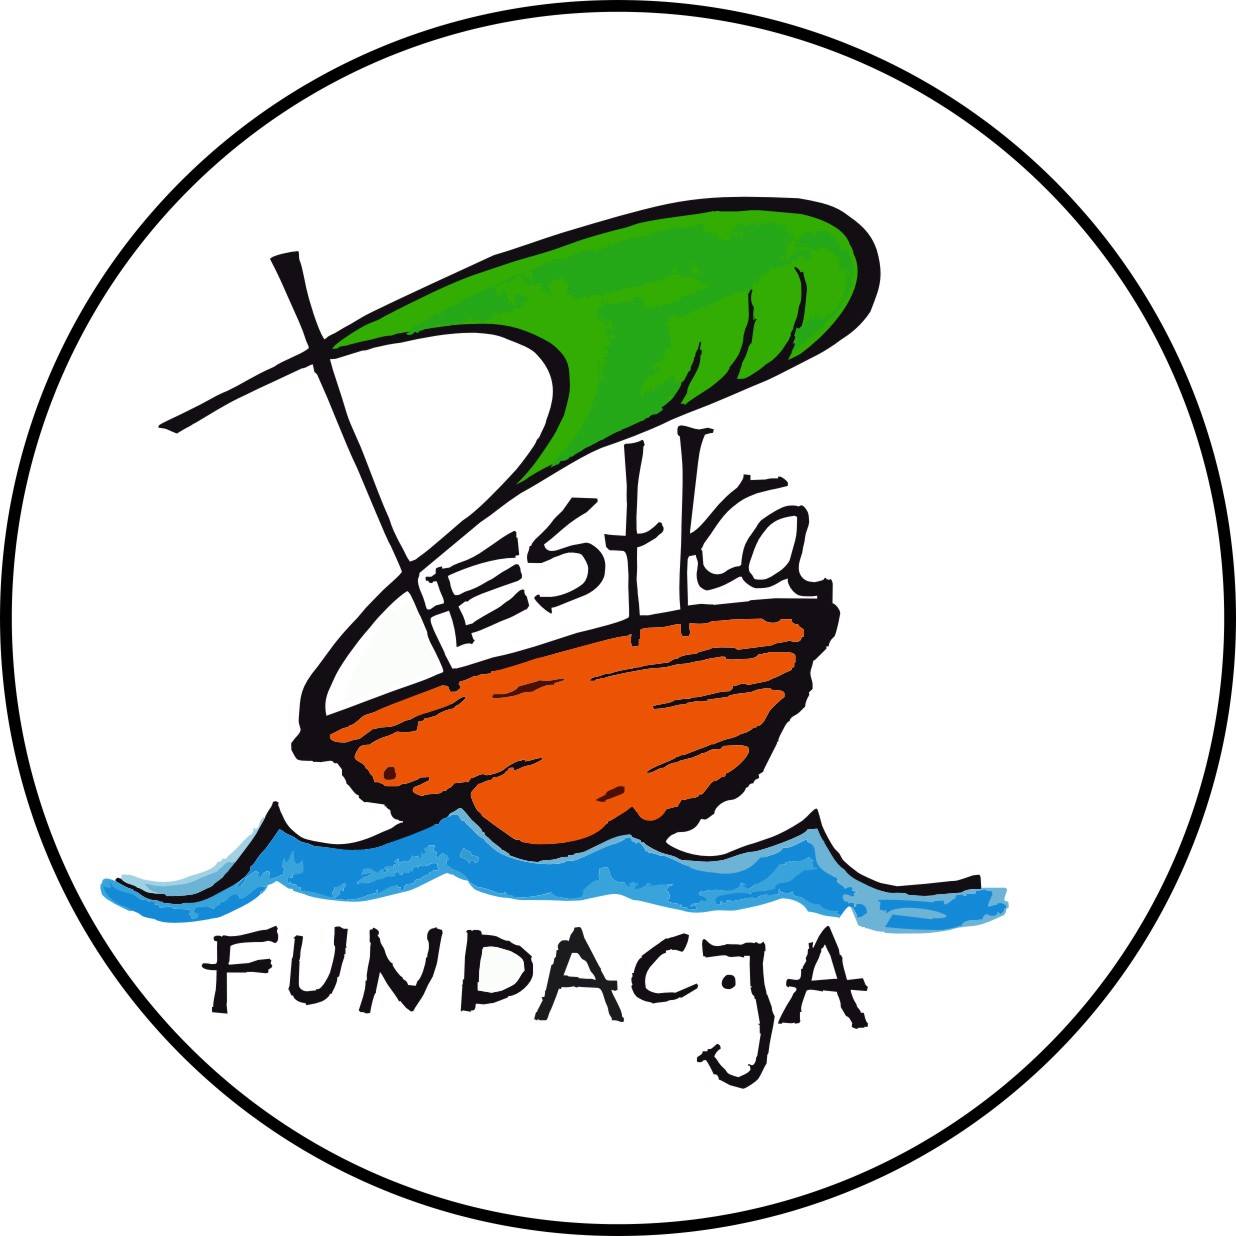 Fundacja PEStka